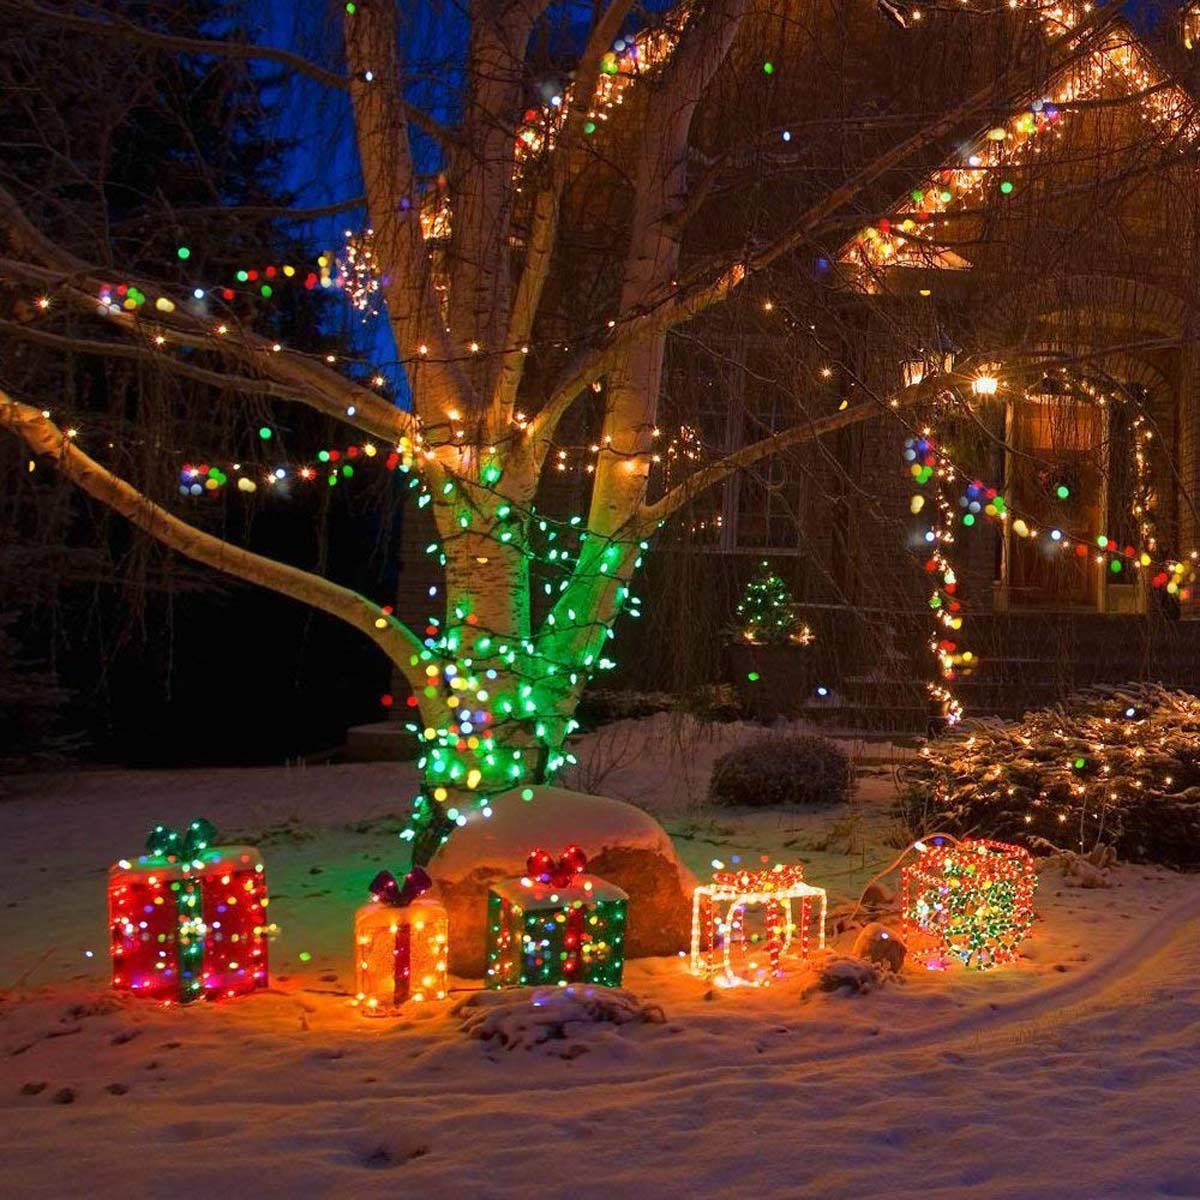 Outdoor Christmas Lighting Ideas and Tips | Family Handyman